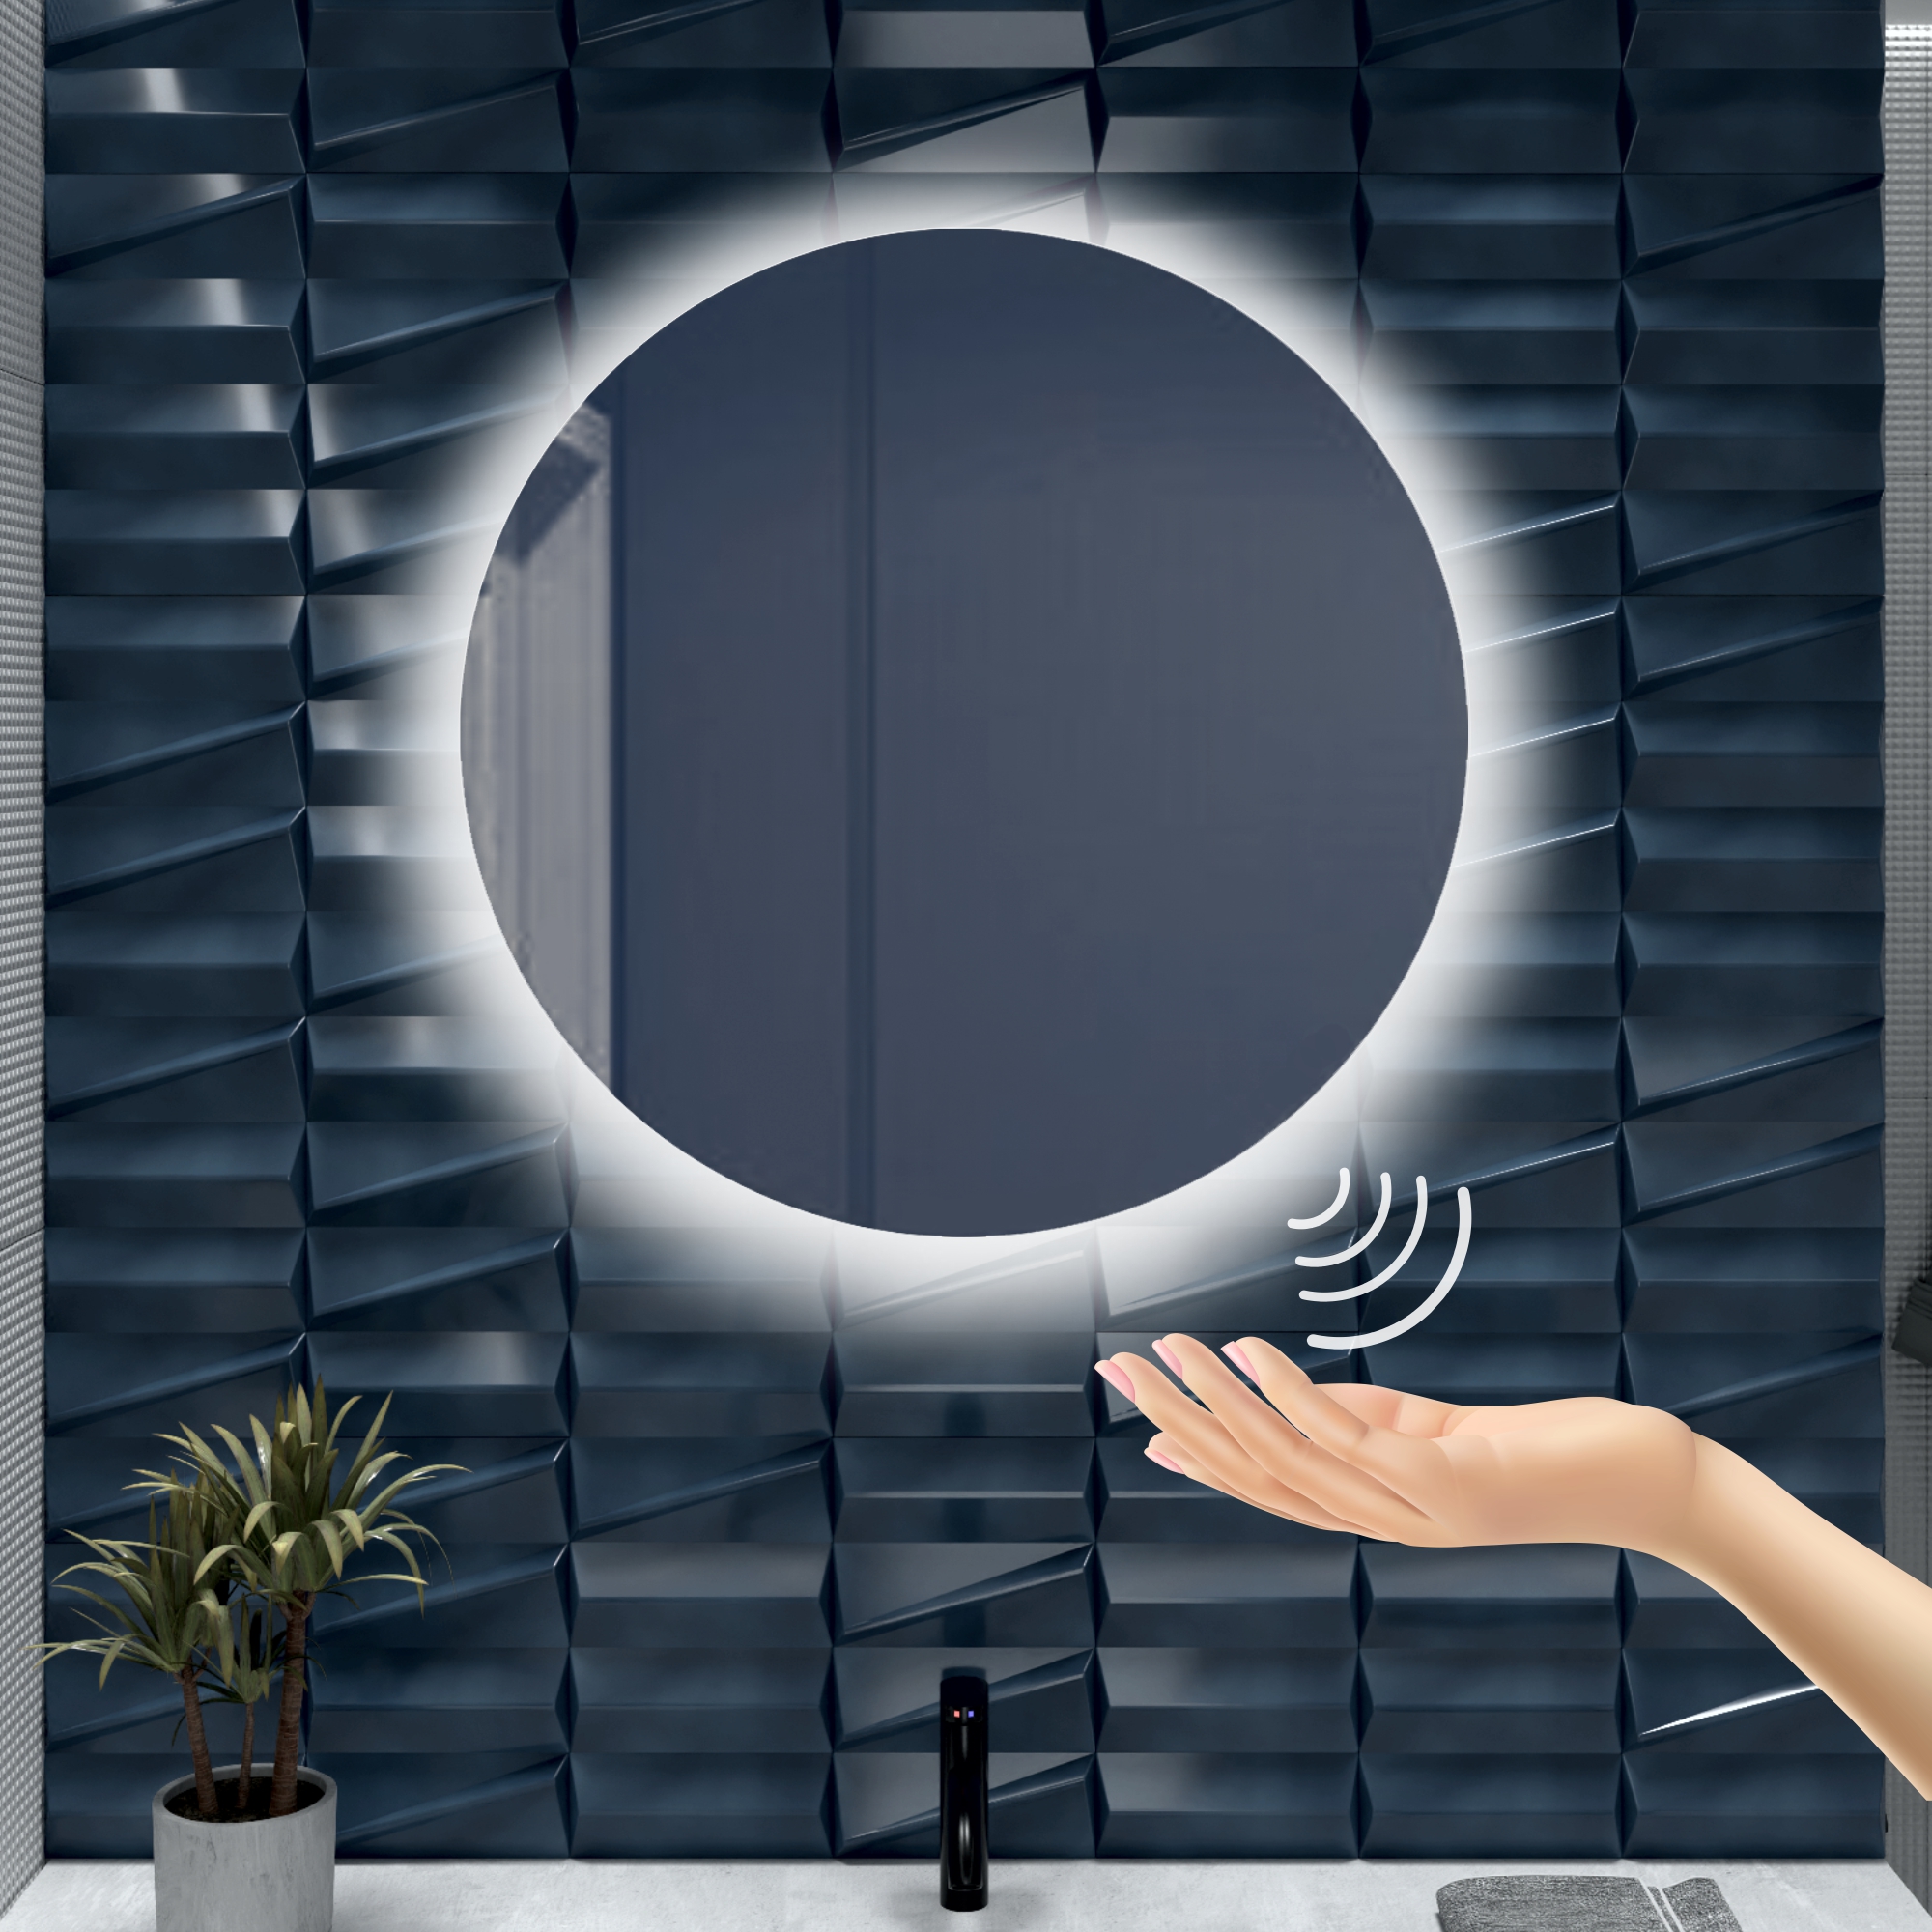 Зеркало для ванной Alfa Mirrors с холодной подсветкой 6500К круглое 90см, арт. Na-9Vzd зеркало круглое slavio maluchini d55 с холодной led подсветкой и взмахом руки